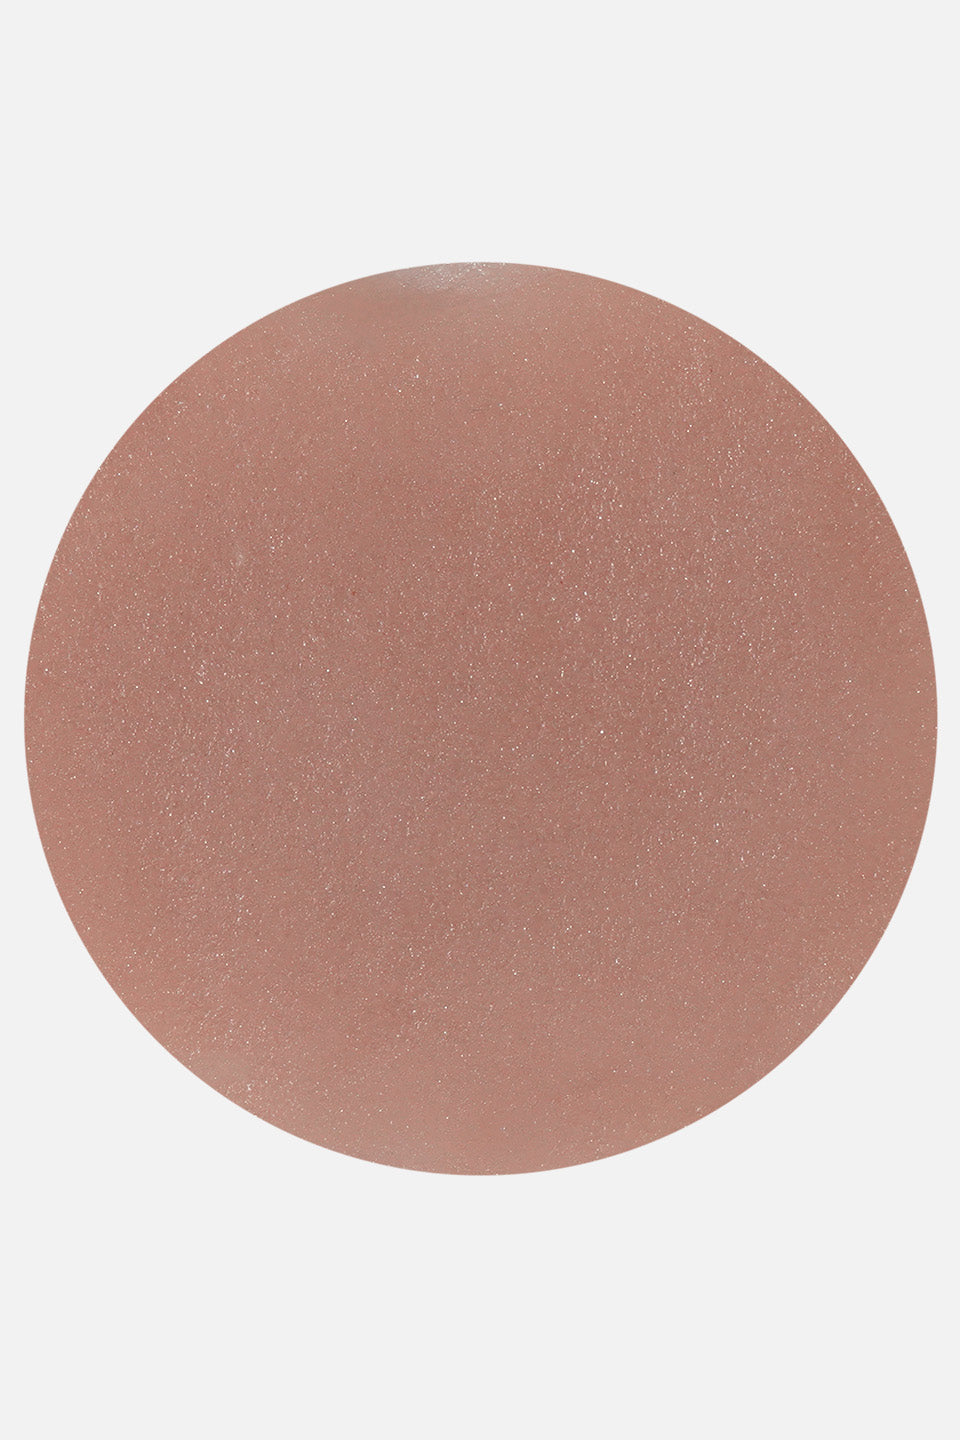 Polypink cover polvo acrílico rosa 45 g